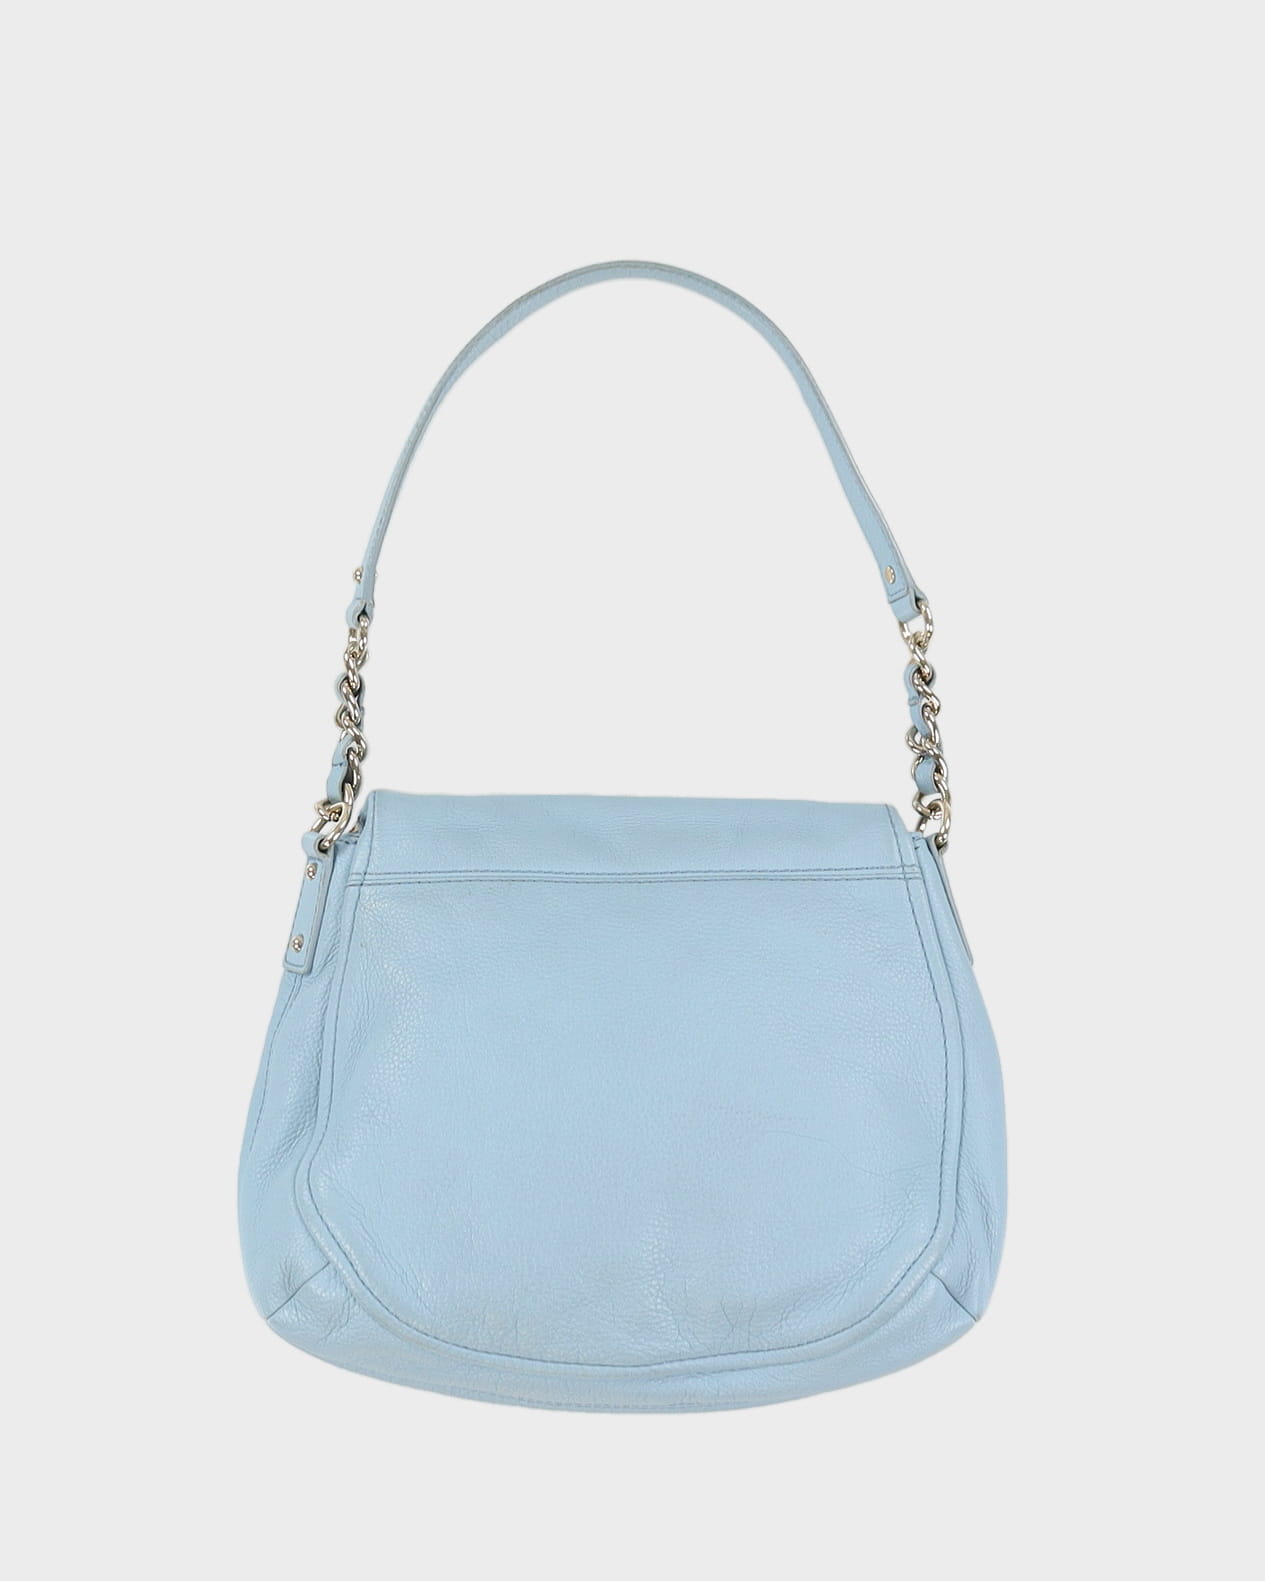 Kate Spade Blue Leather Handbag - One Size